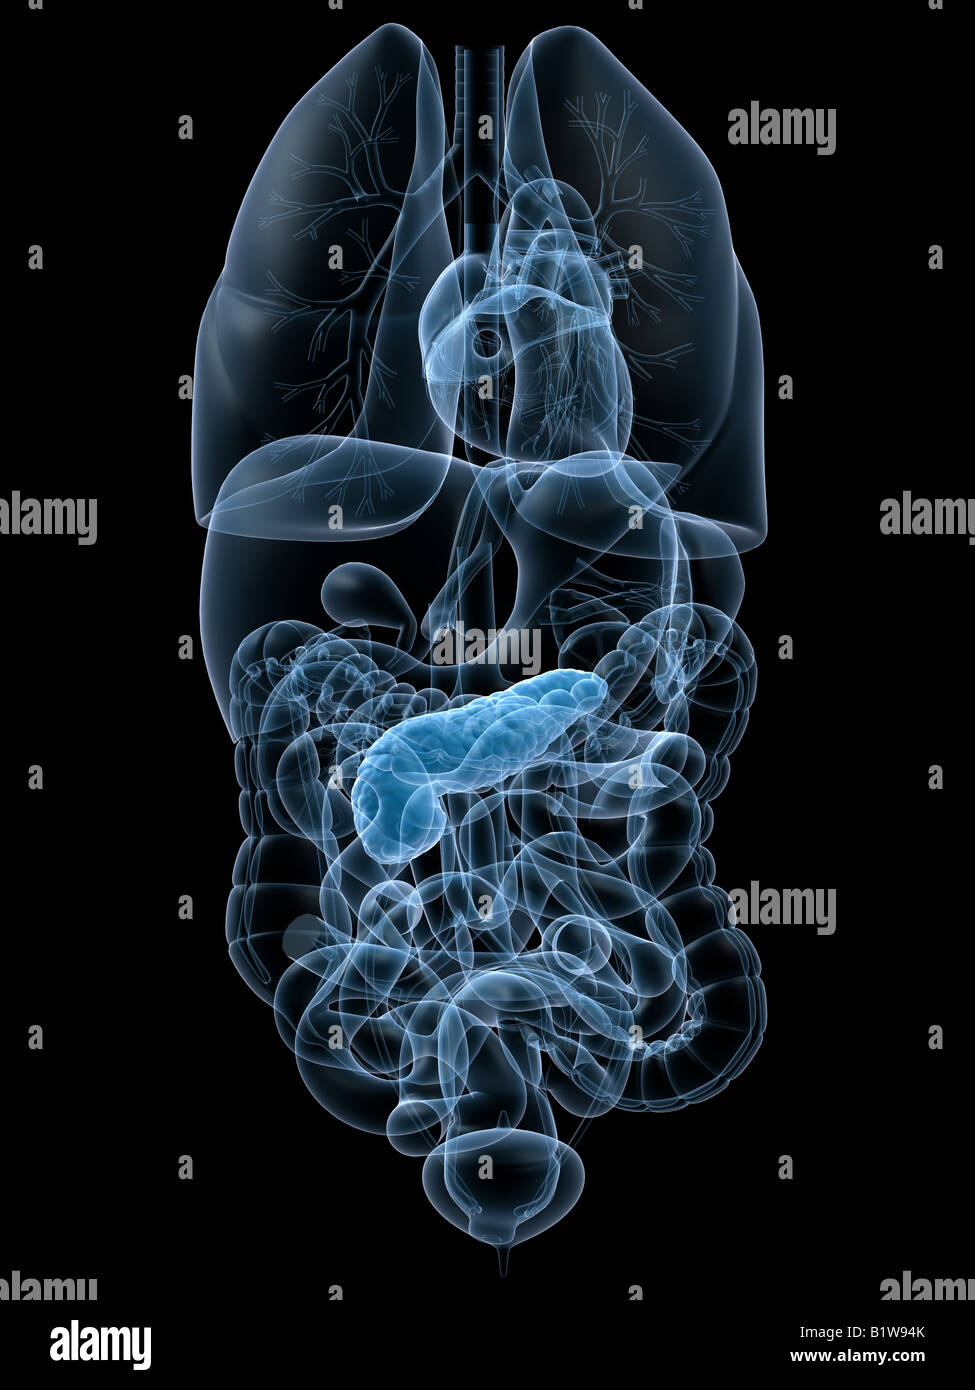 human pancreas Stock Photo - Alamy